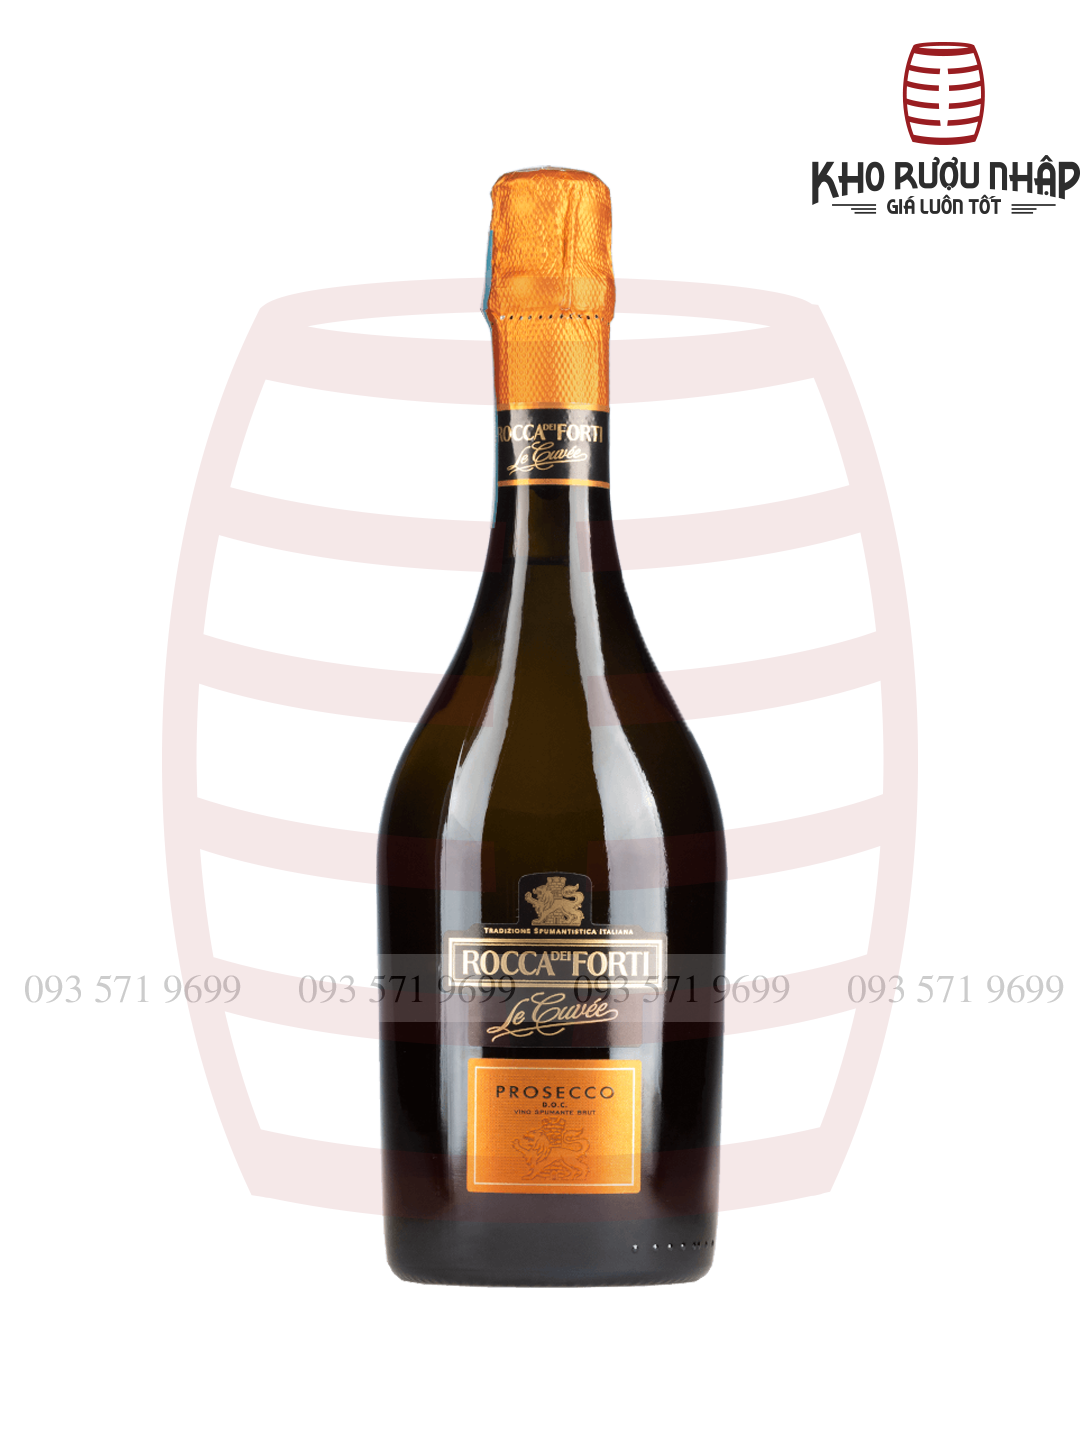 Rượu vang nổ Rocca dei forti Prosecco Le Cuvee mã HP1-375